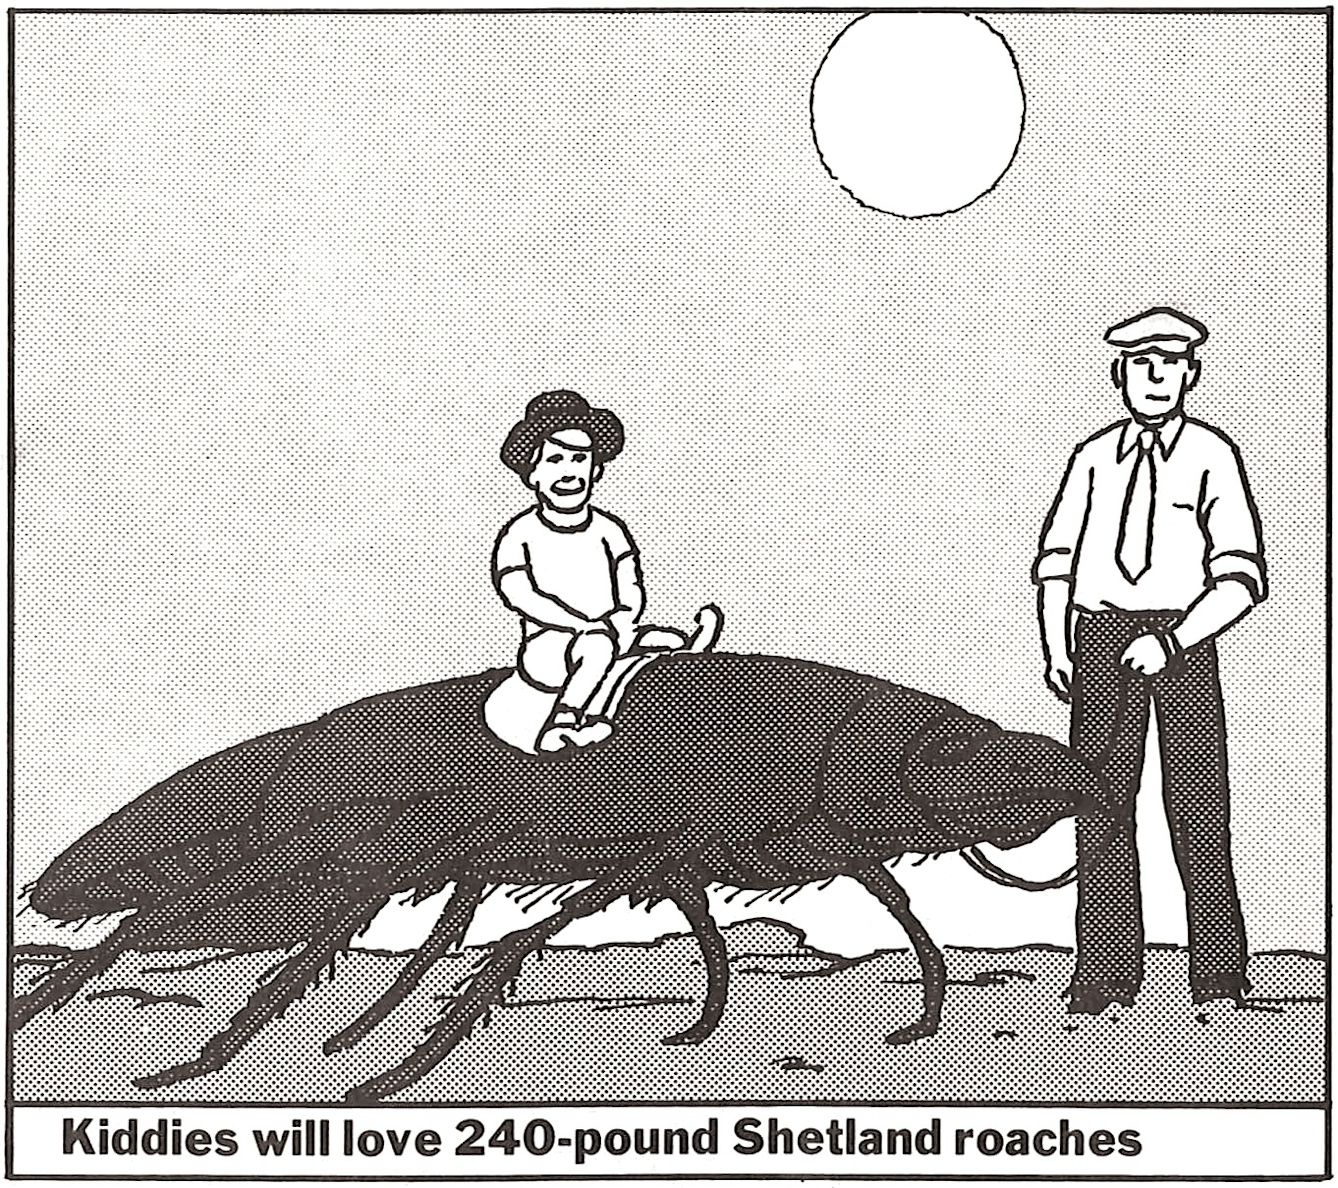 A cartoon of a young boy riding a giant cockroach